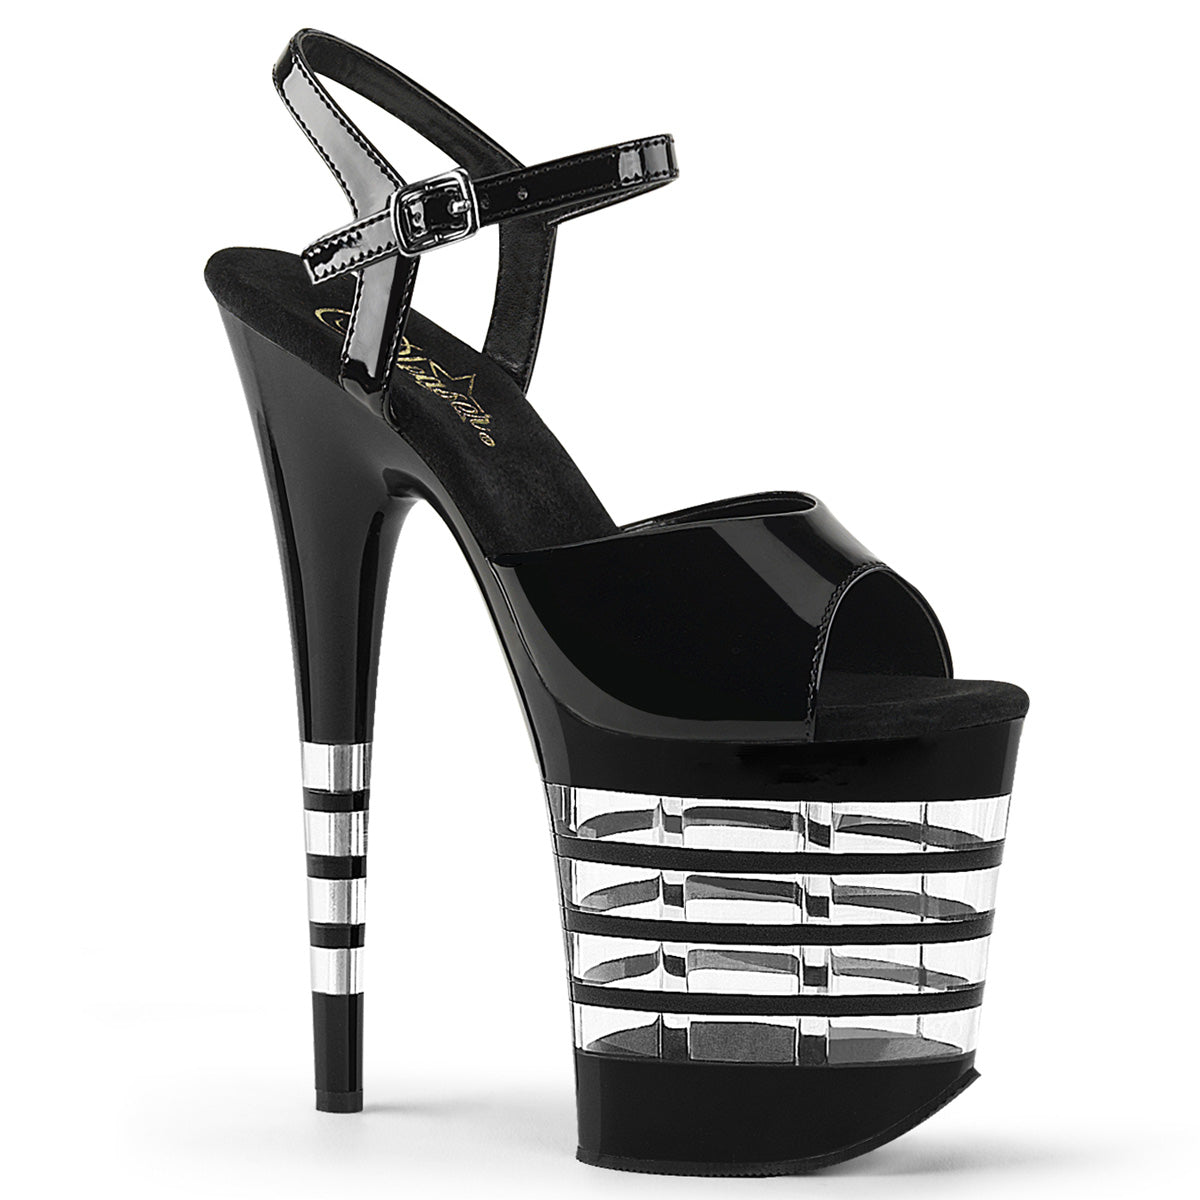 FLAMINGO-809LN 8" Heel Black Patent  Stripper Platforms High Heels